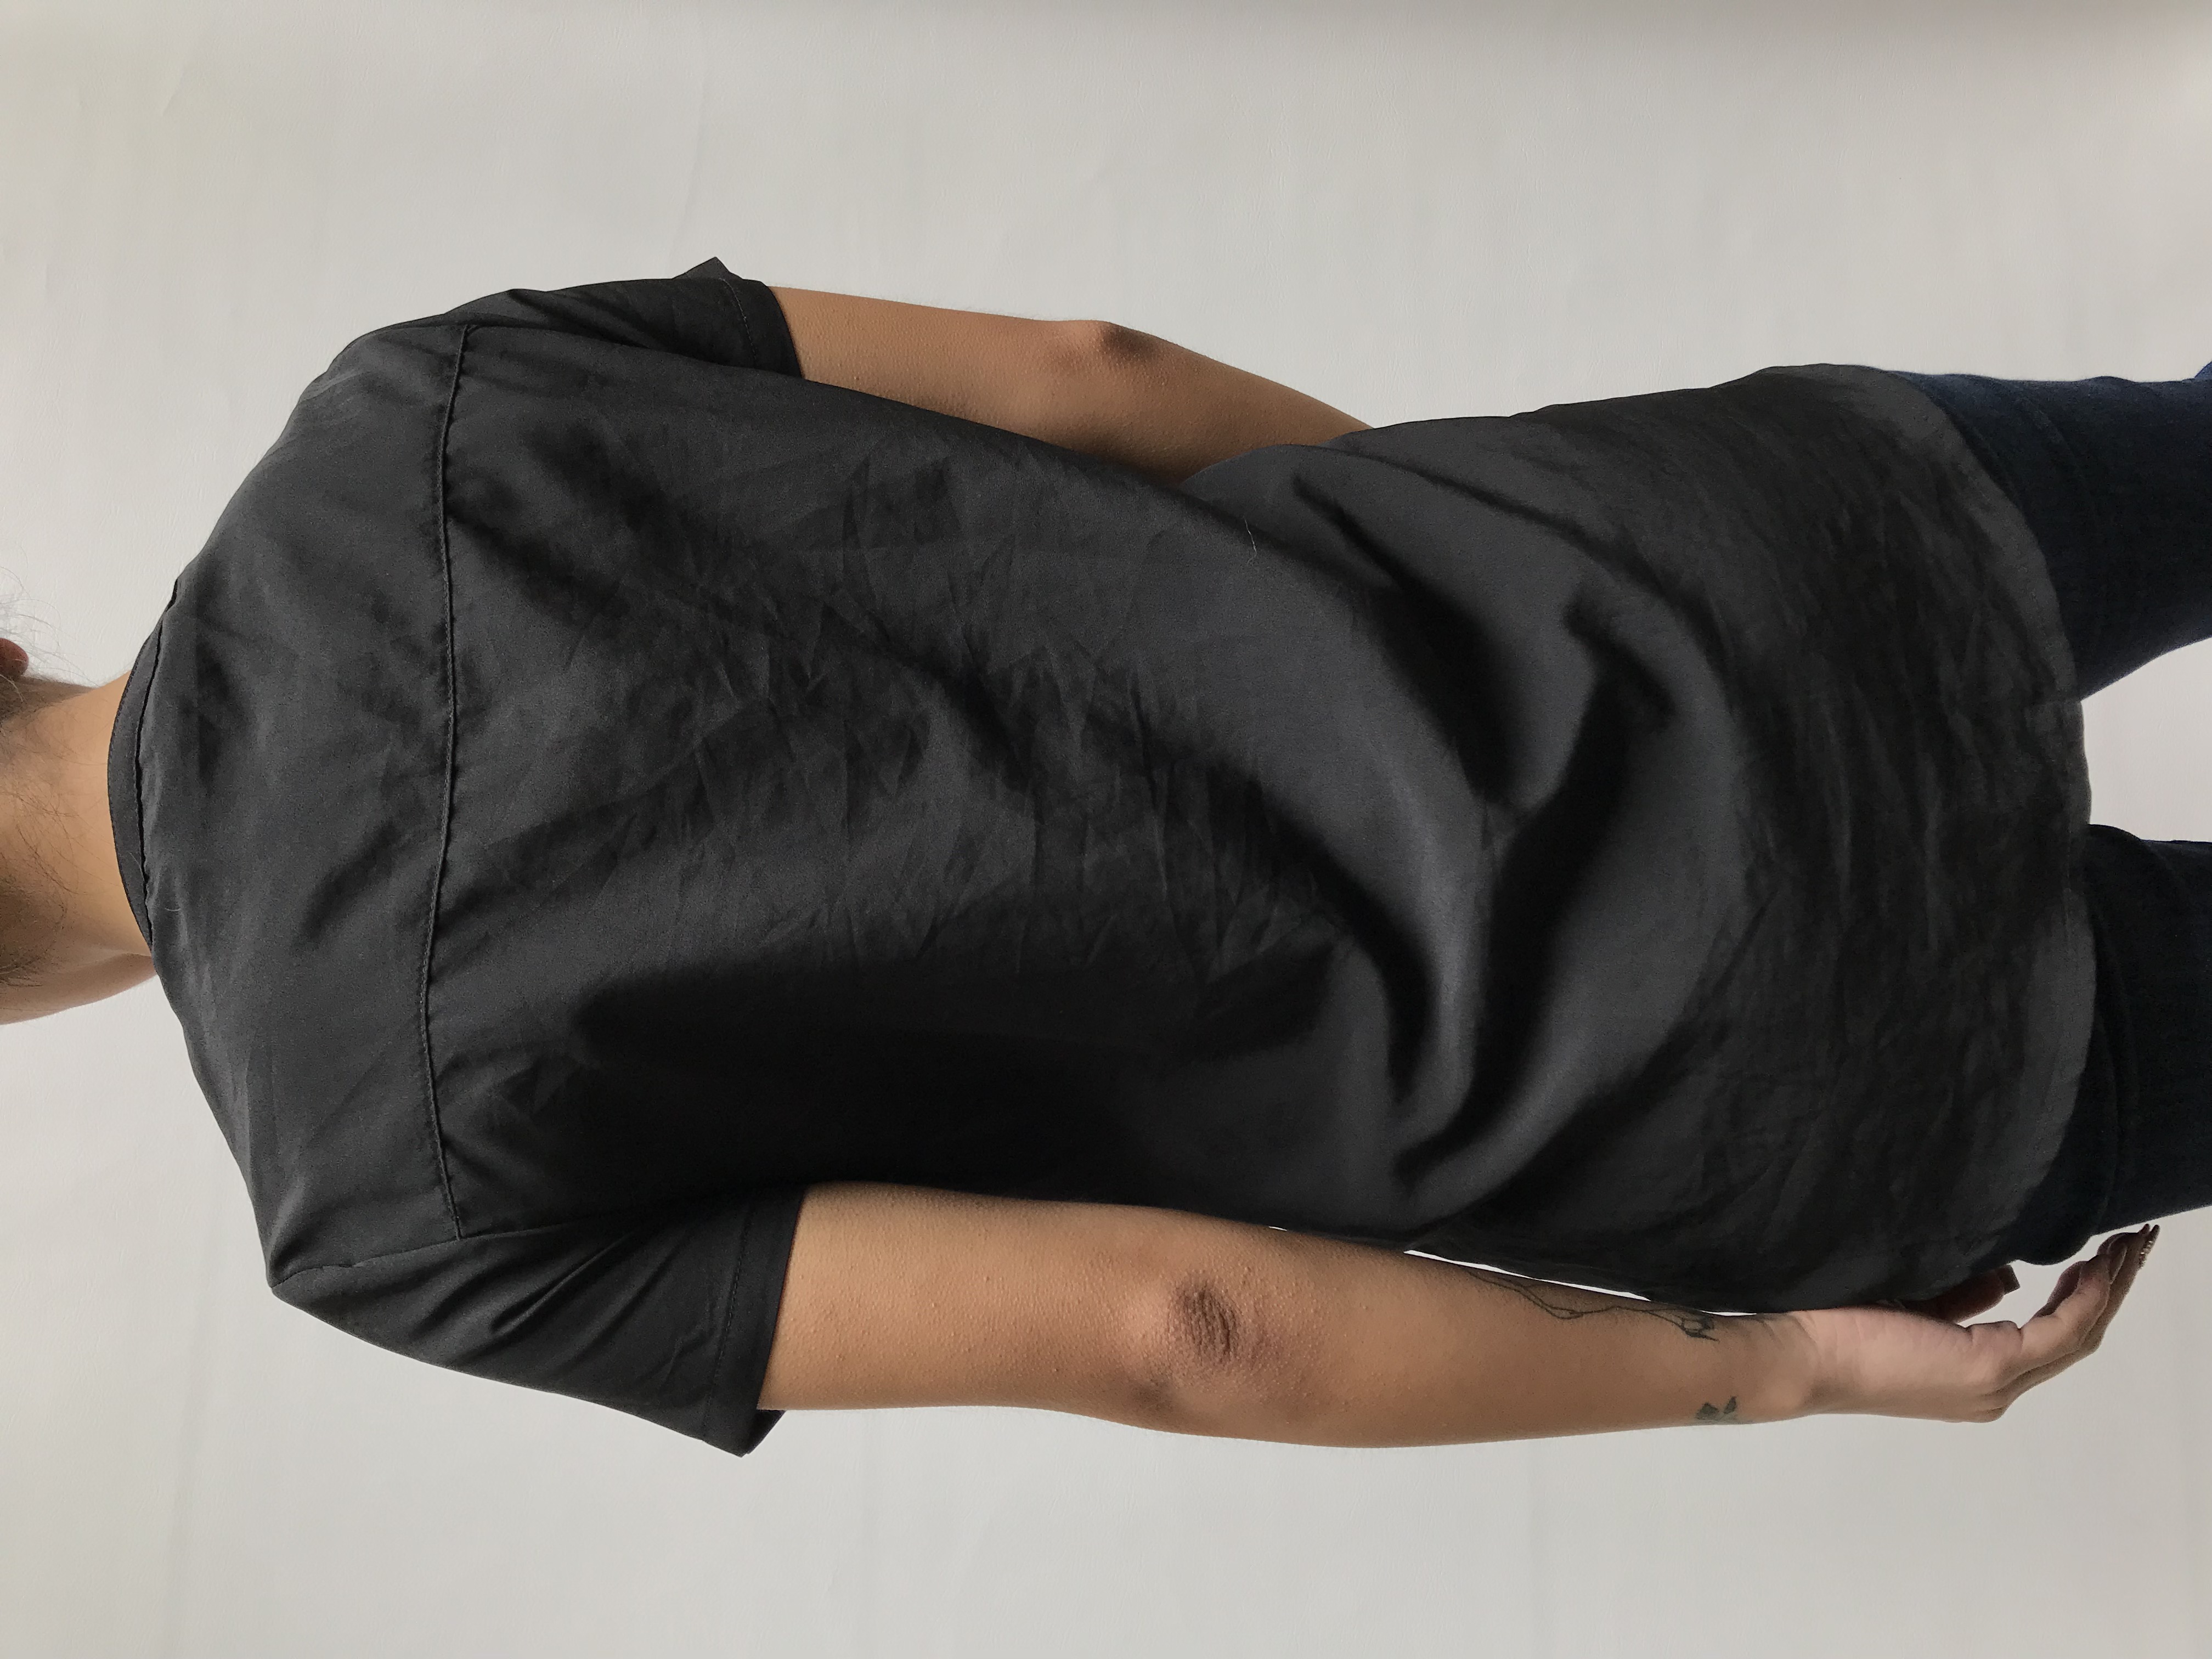 Blusa tela plana negra con botones en tono bronce. Busto 98cm Largo 65cm